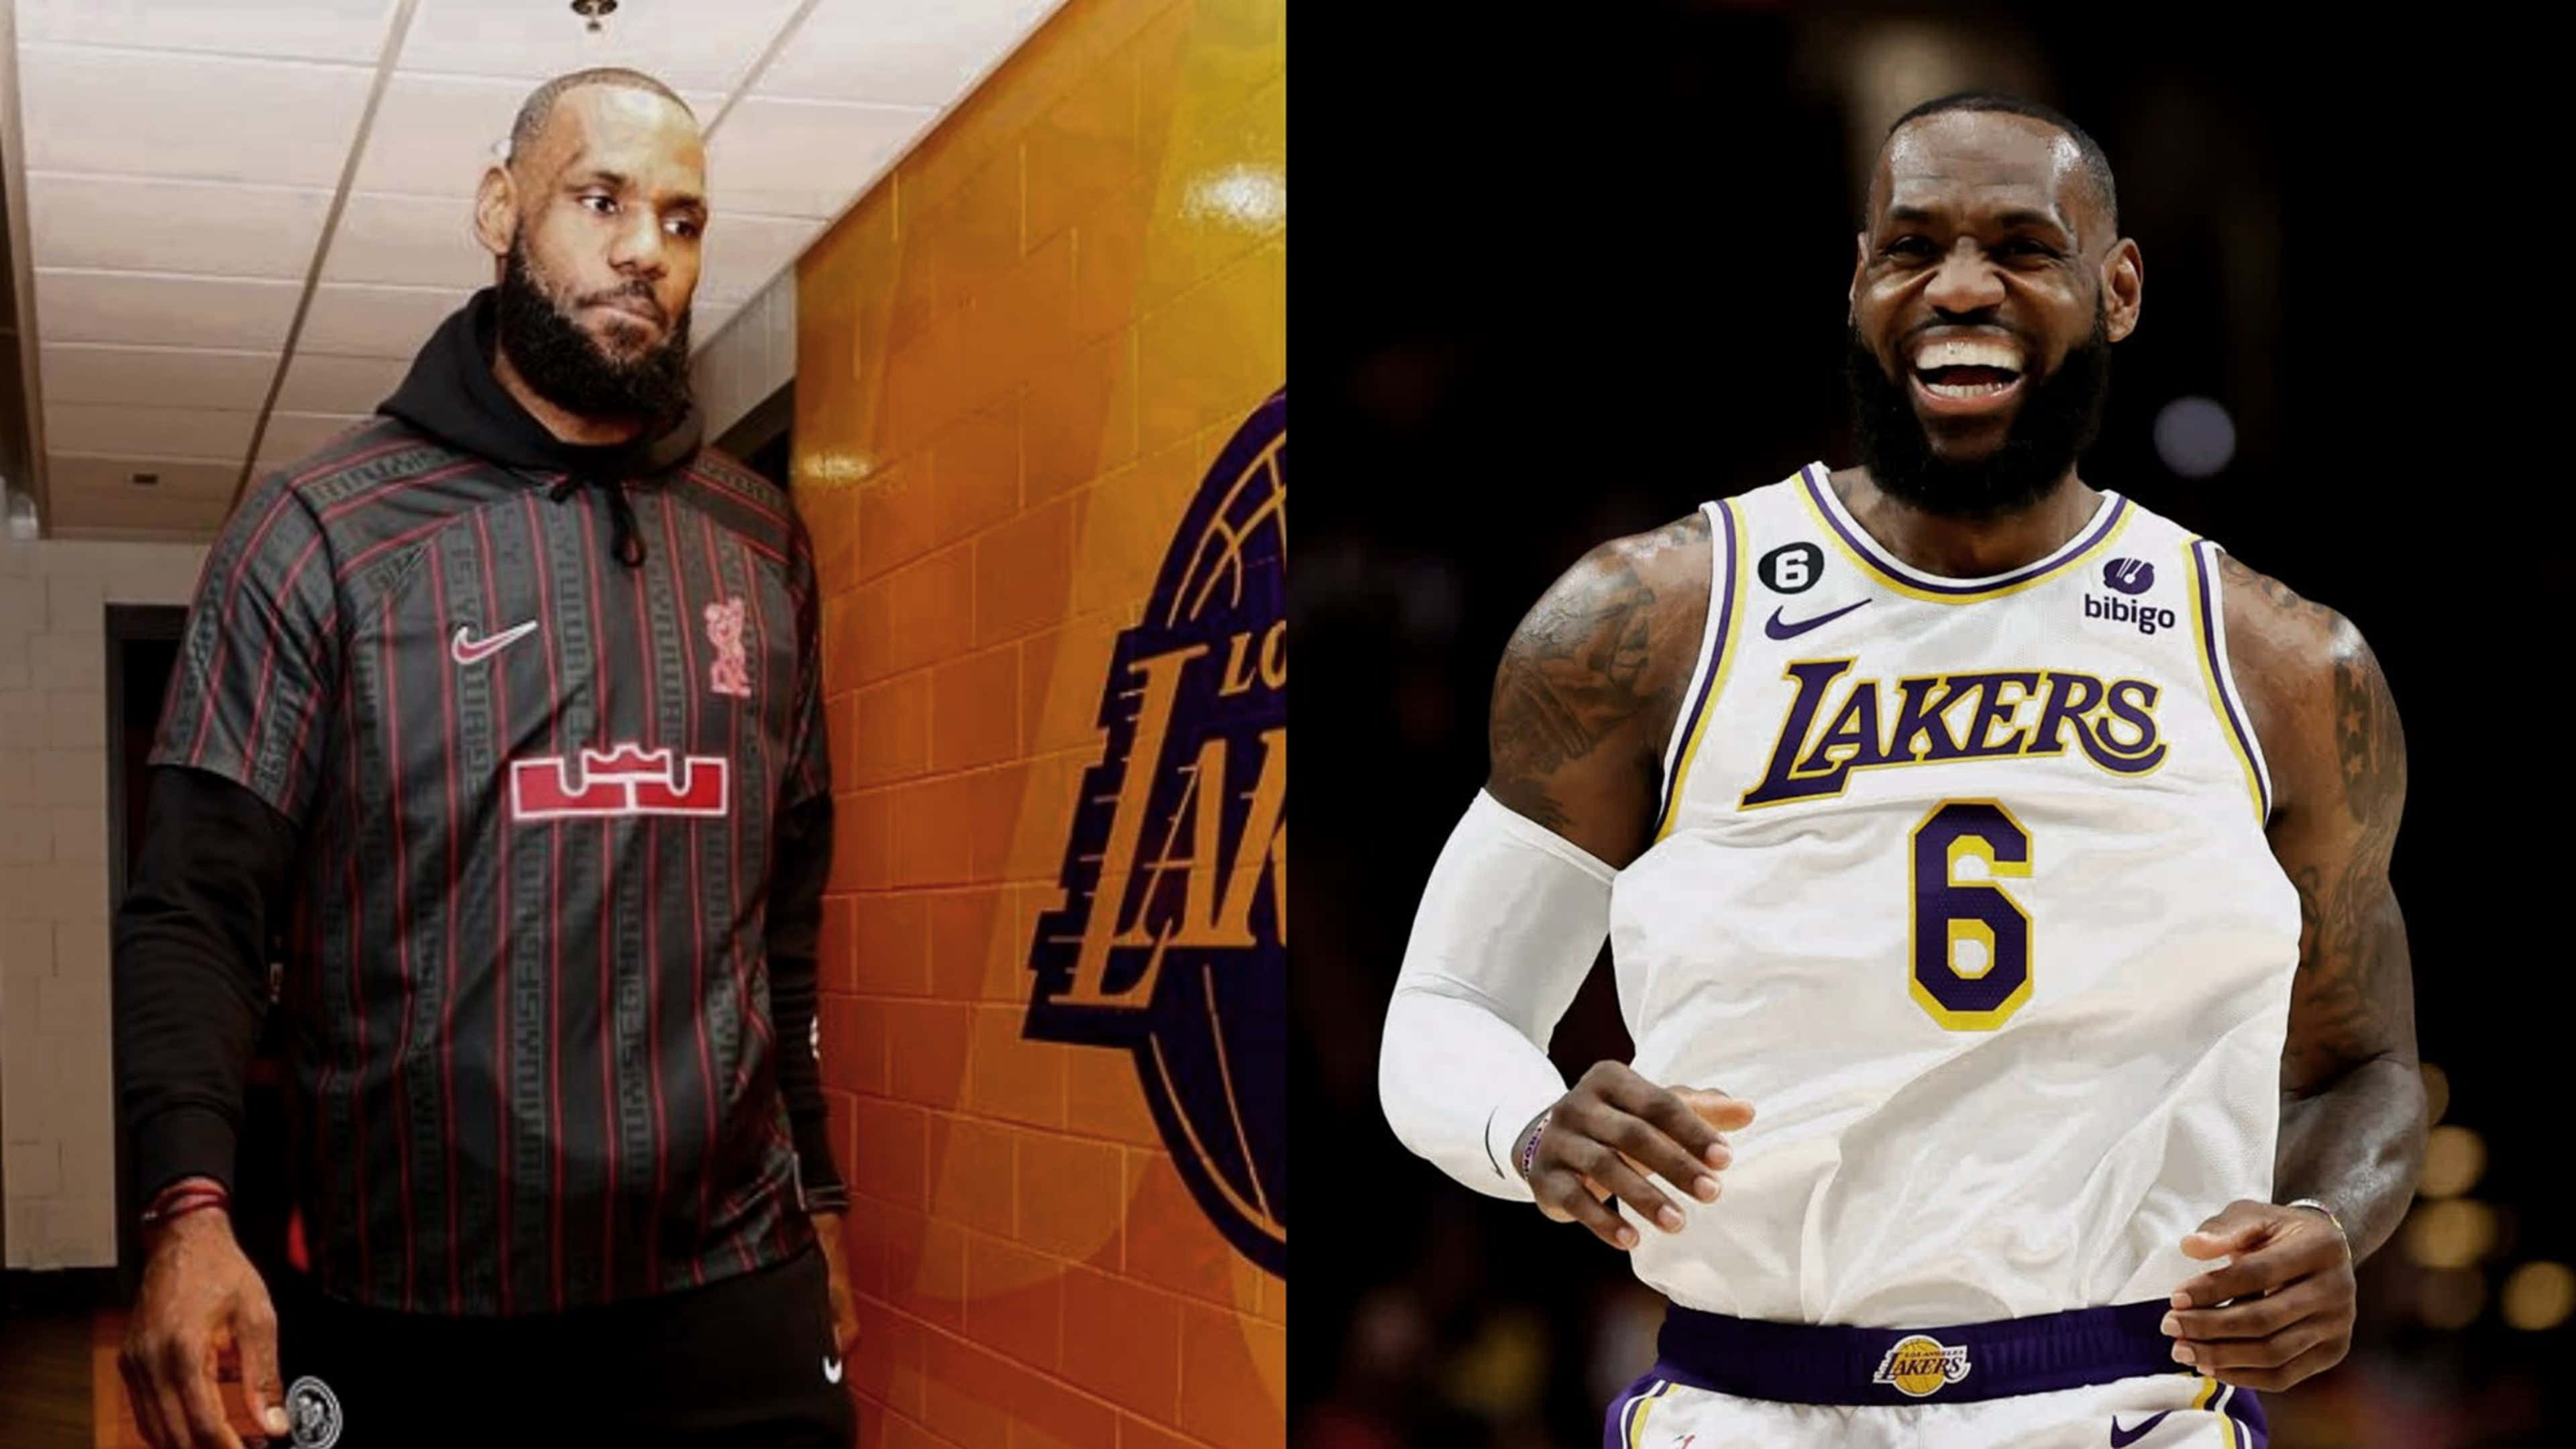 LeBron James Lakers Jerseys, Shirts & Gear 2018